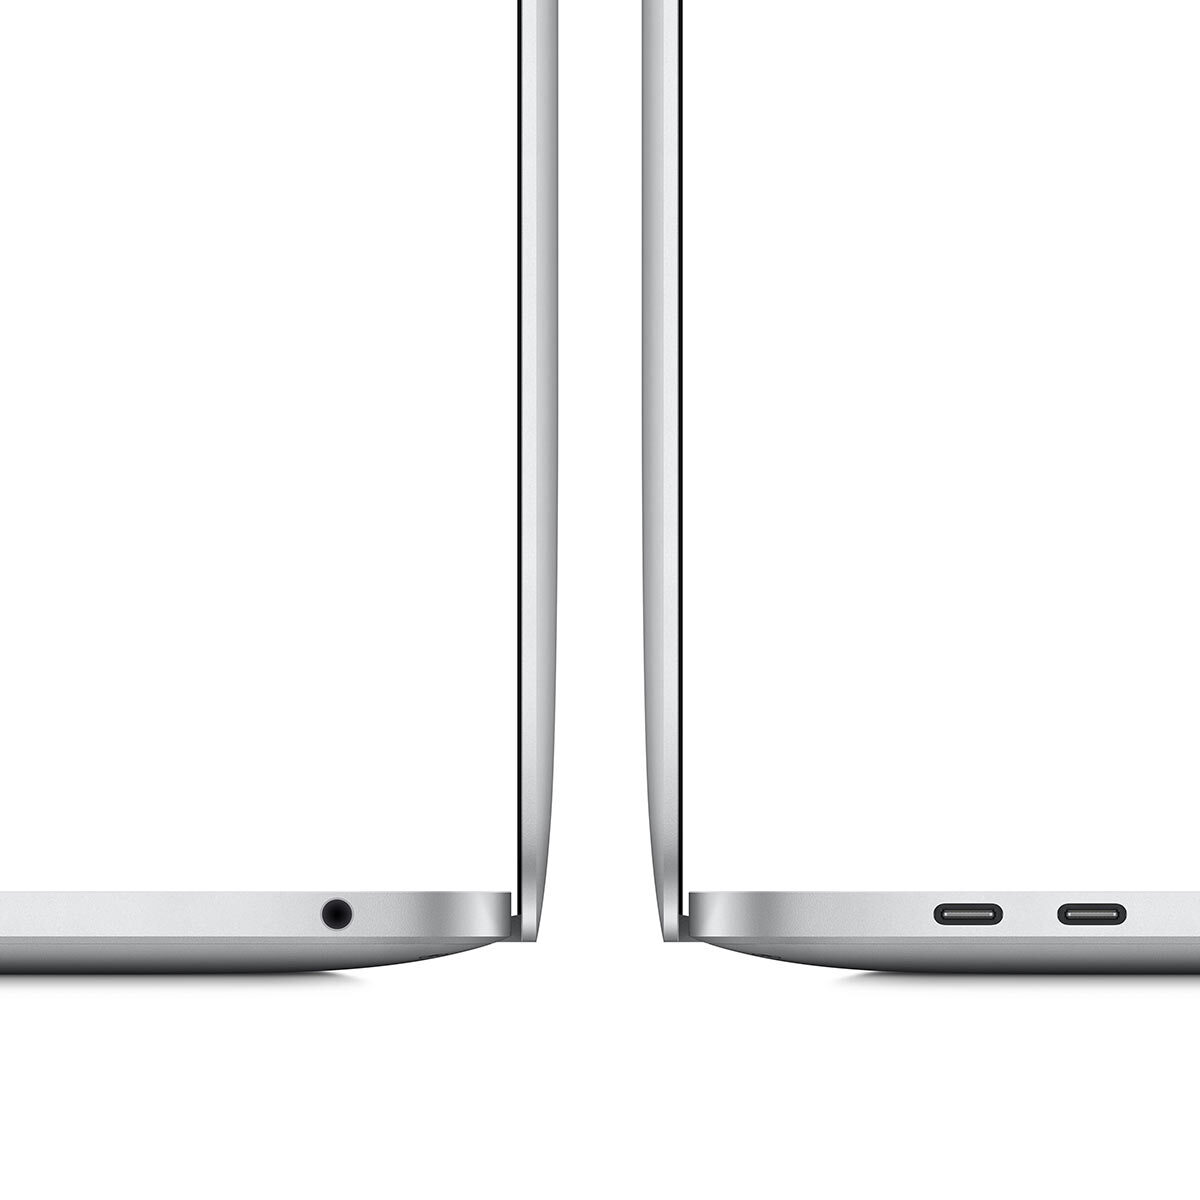 Buy Apple MacBook Pro 2020, Apple M1 Chip, 8GB RAM, 256GB SSD, 13.3 Inch in Silver, MYDA2B/A at costco.co.uk